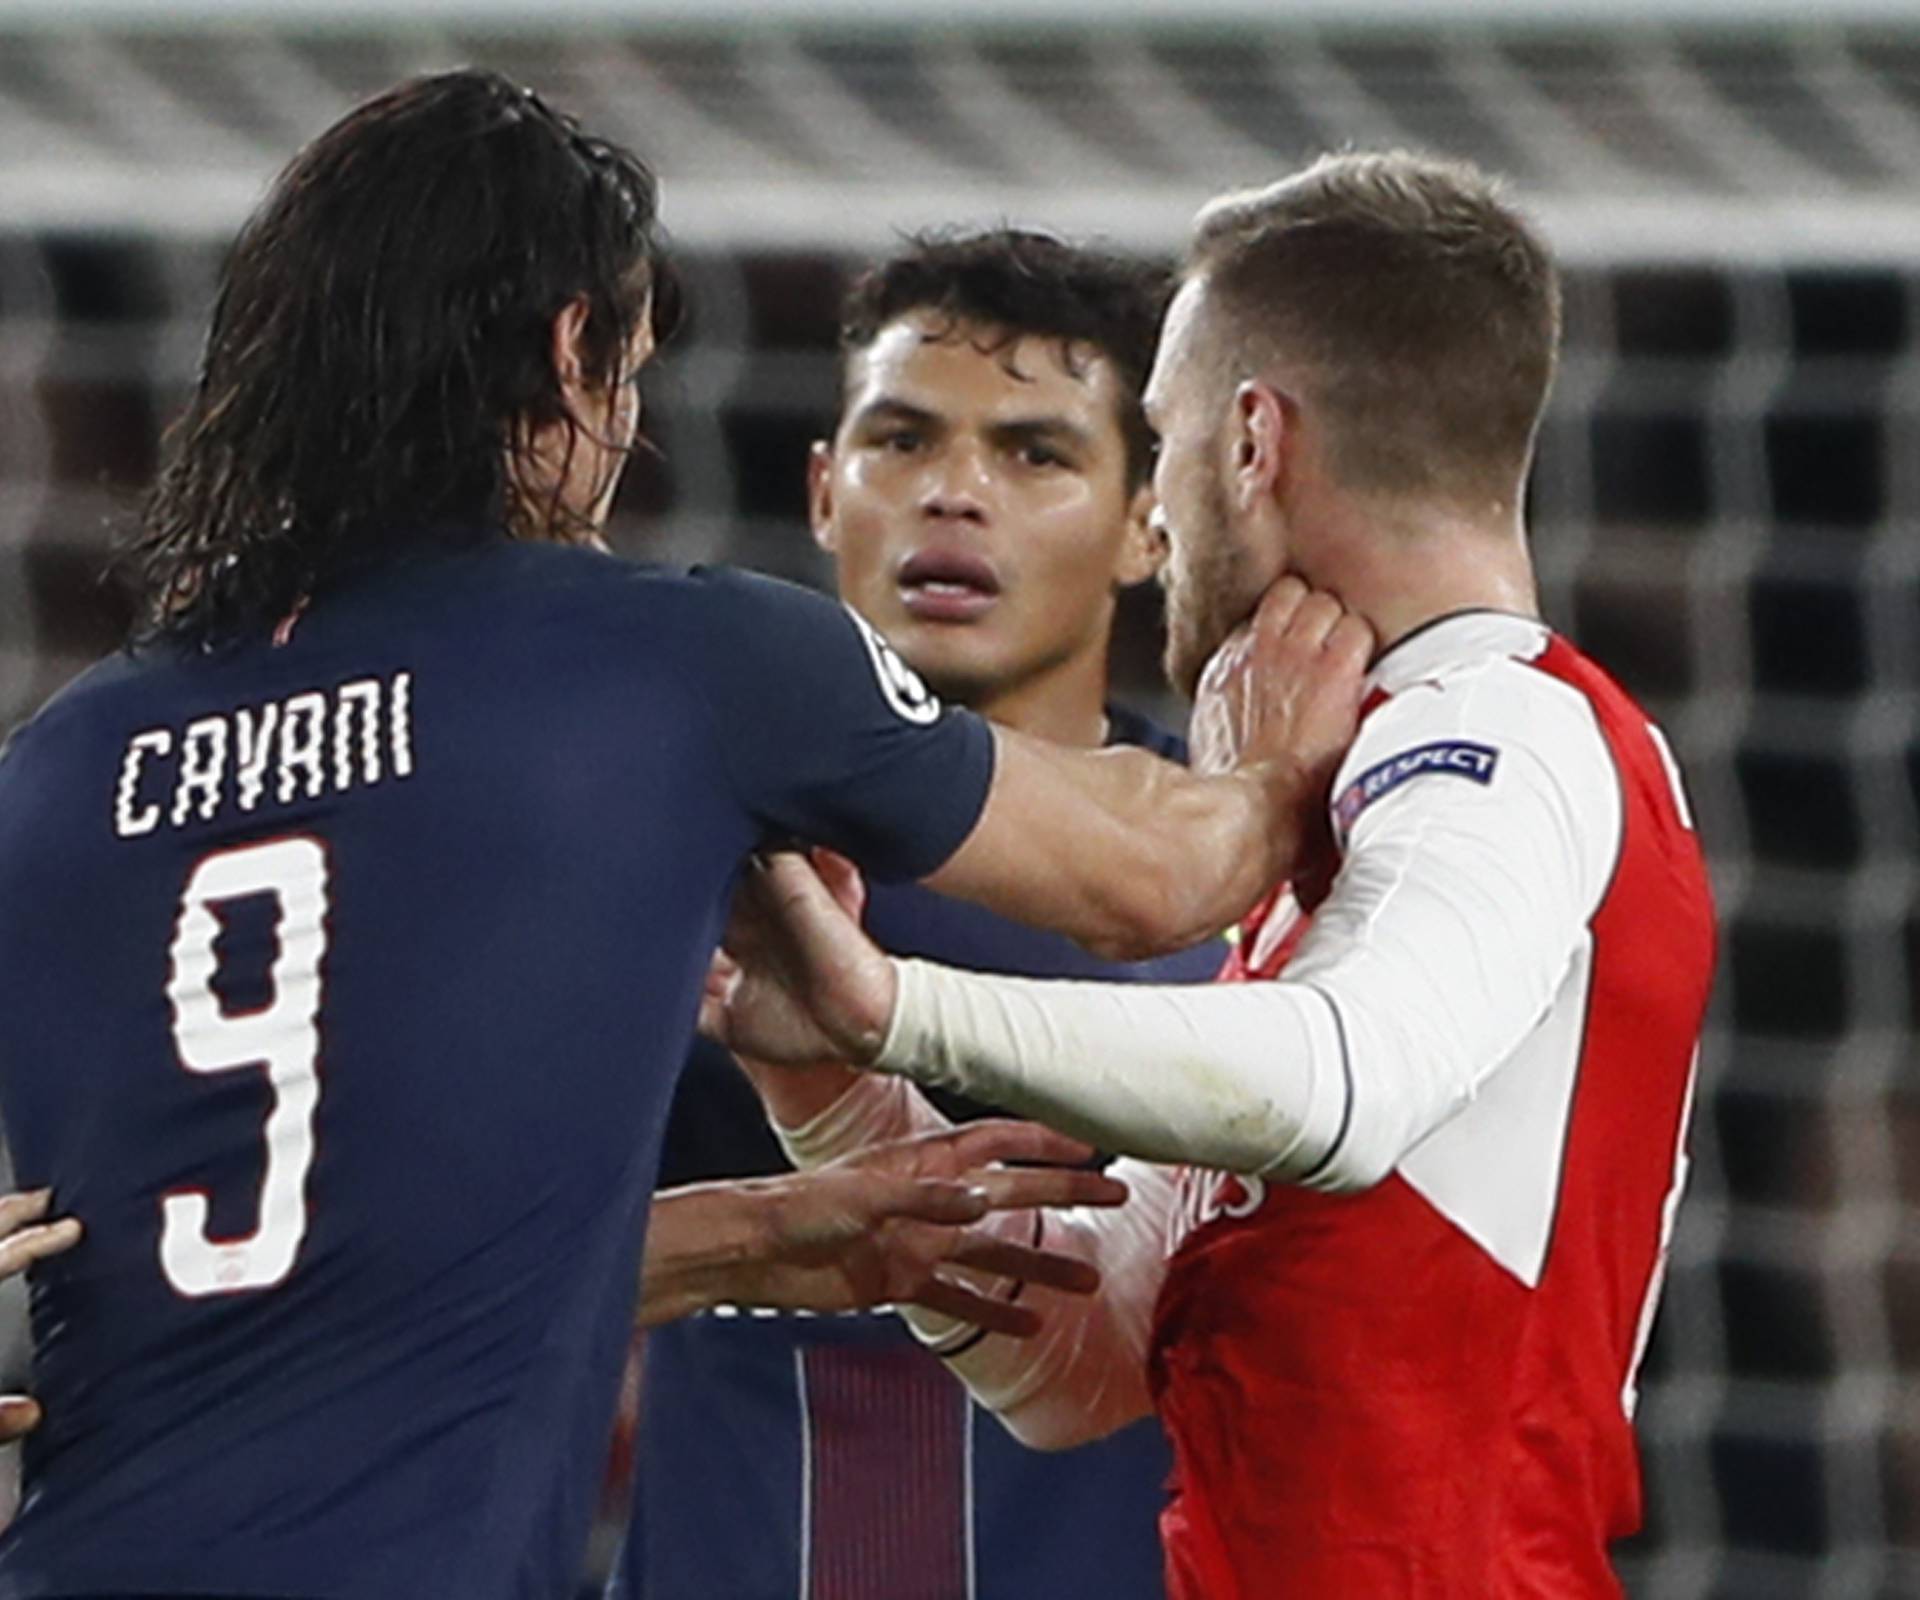 Paris Saint-Germain's Edinson Cavani clashes with Arsenal's Aaron Ramsey as Thiago Silva looks on